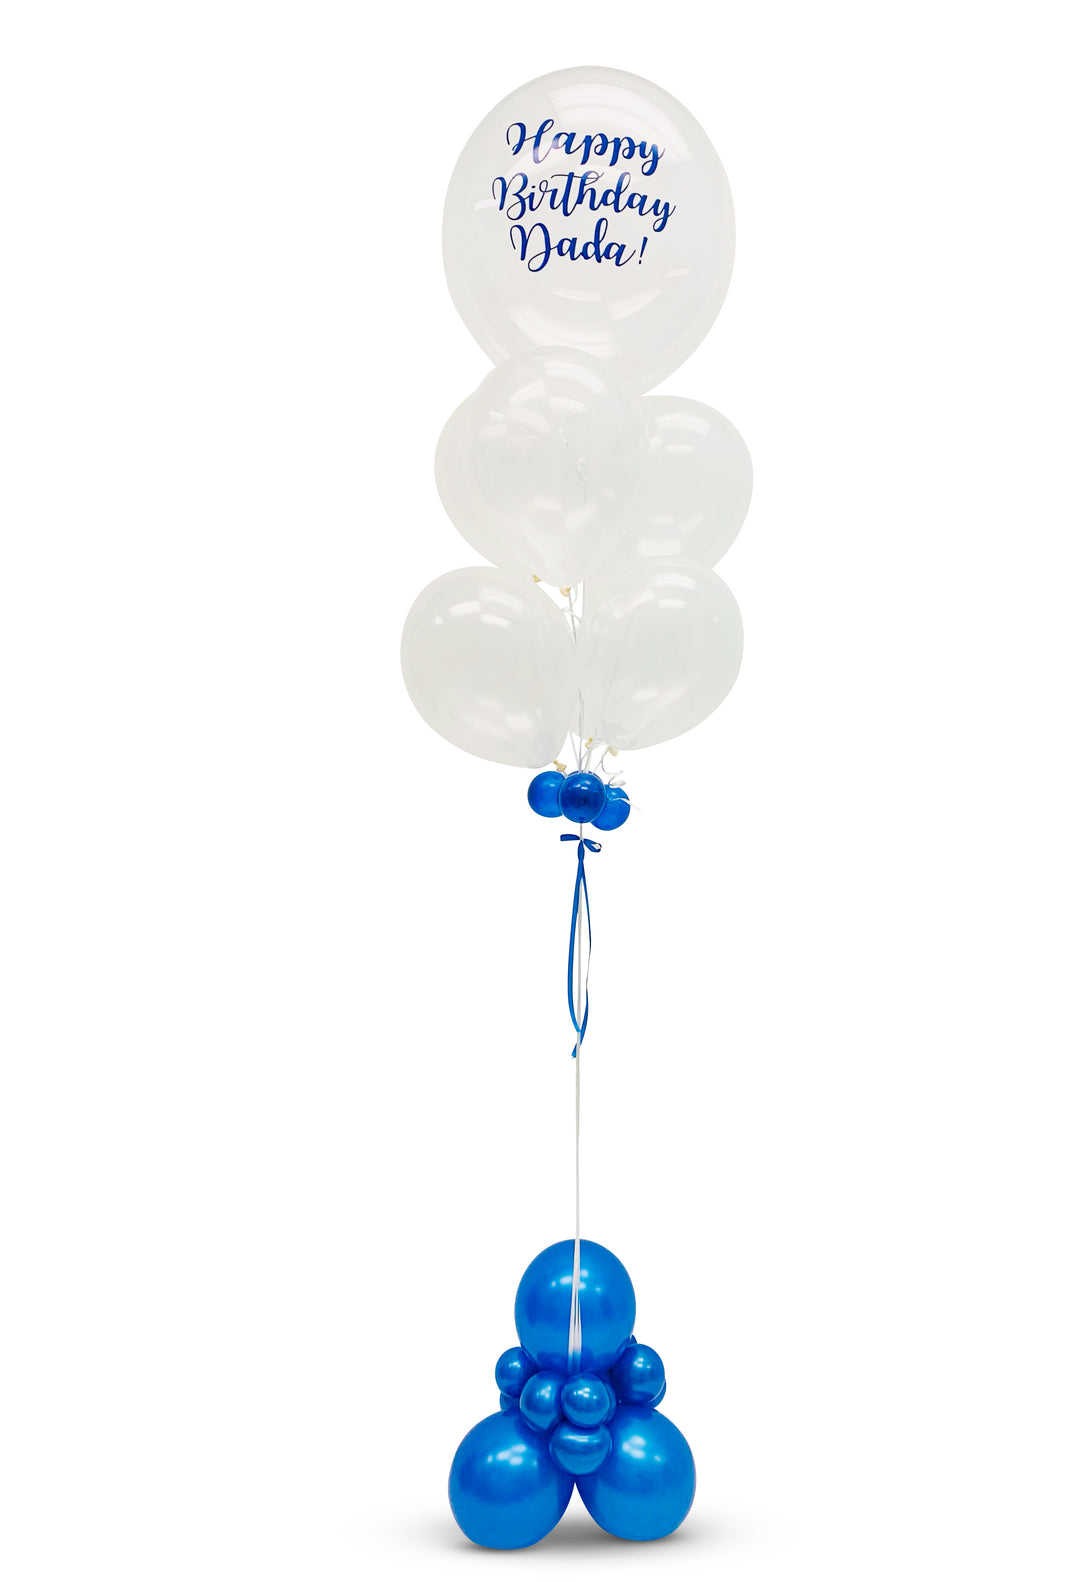 Balloons toronto 